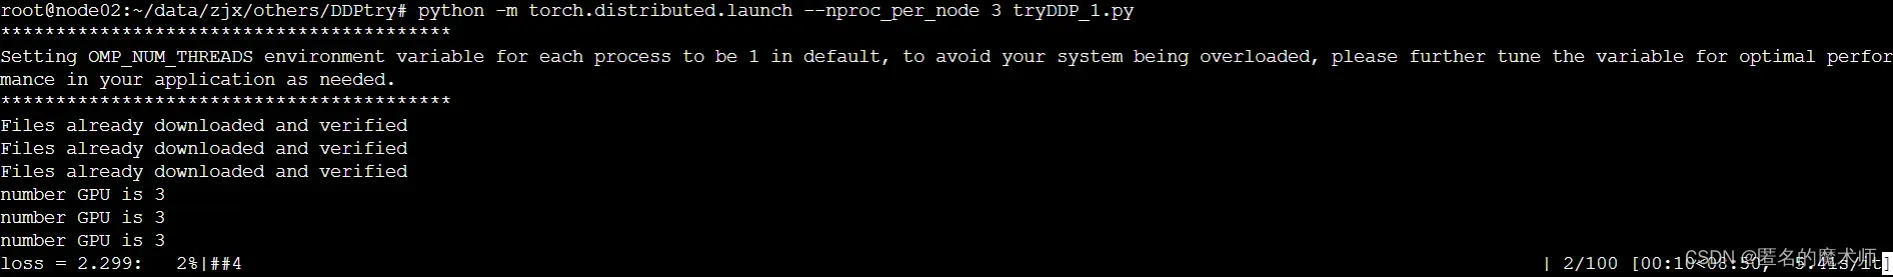 关于subprocess.CalledProcessError: Commandxxx returned non-zero exit status 1. 的问题--pytorch分布式训练问题